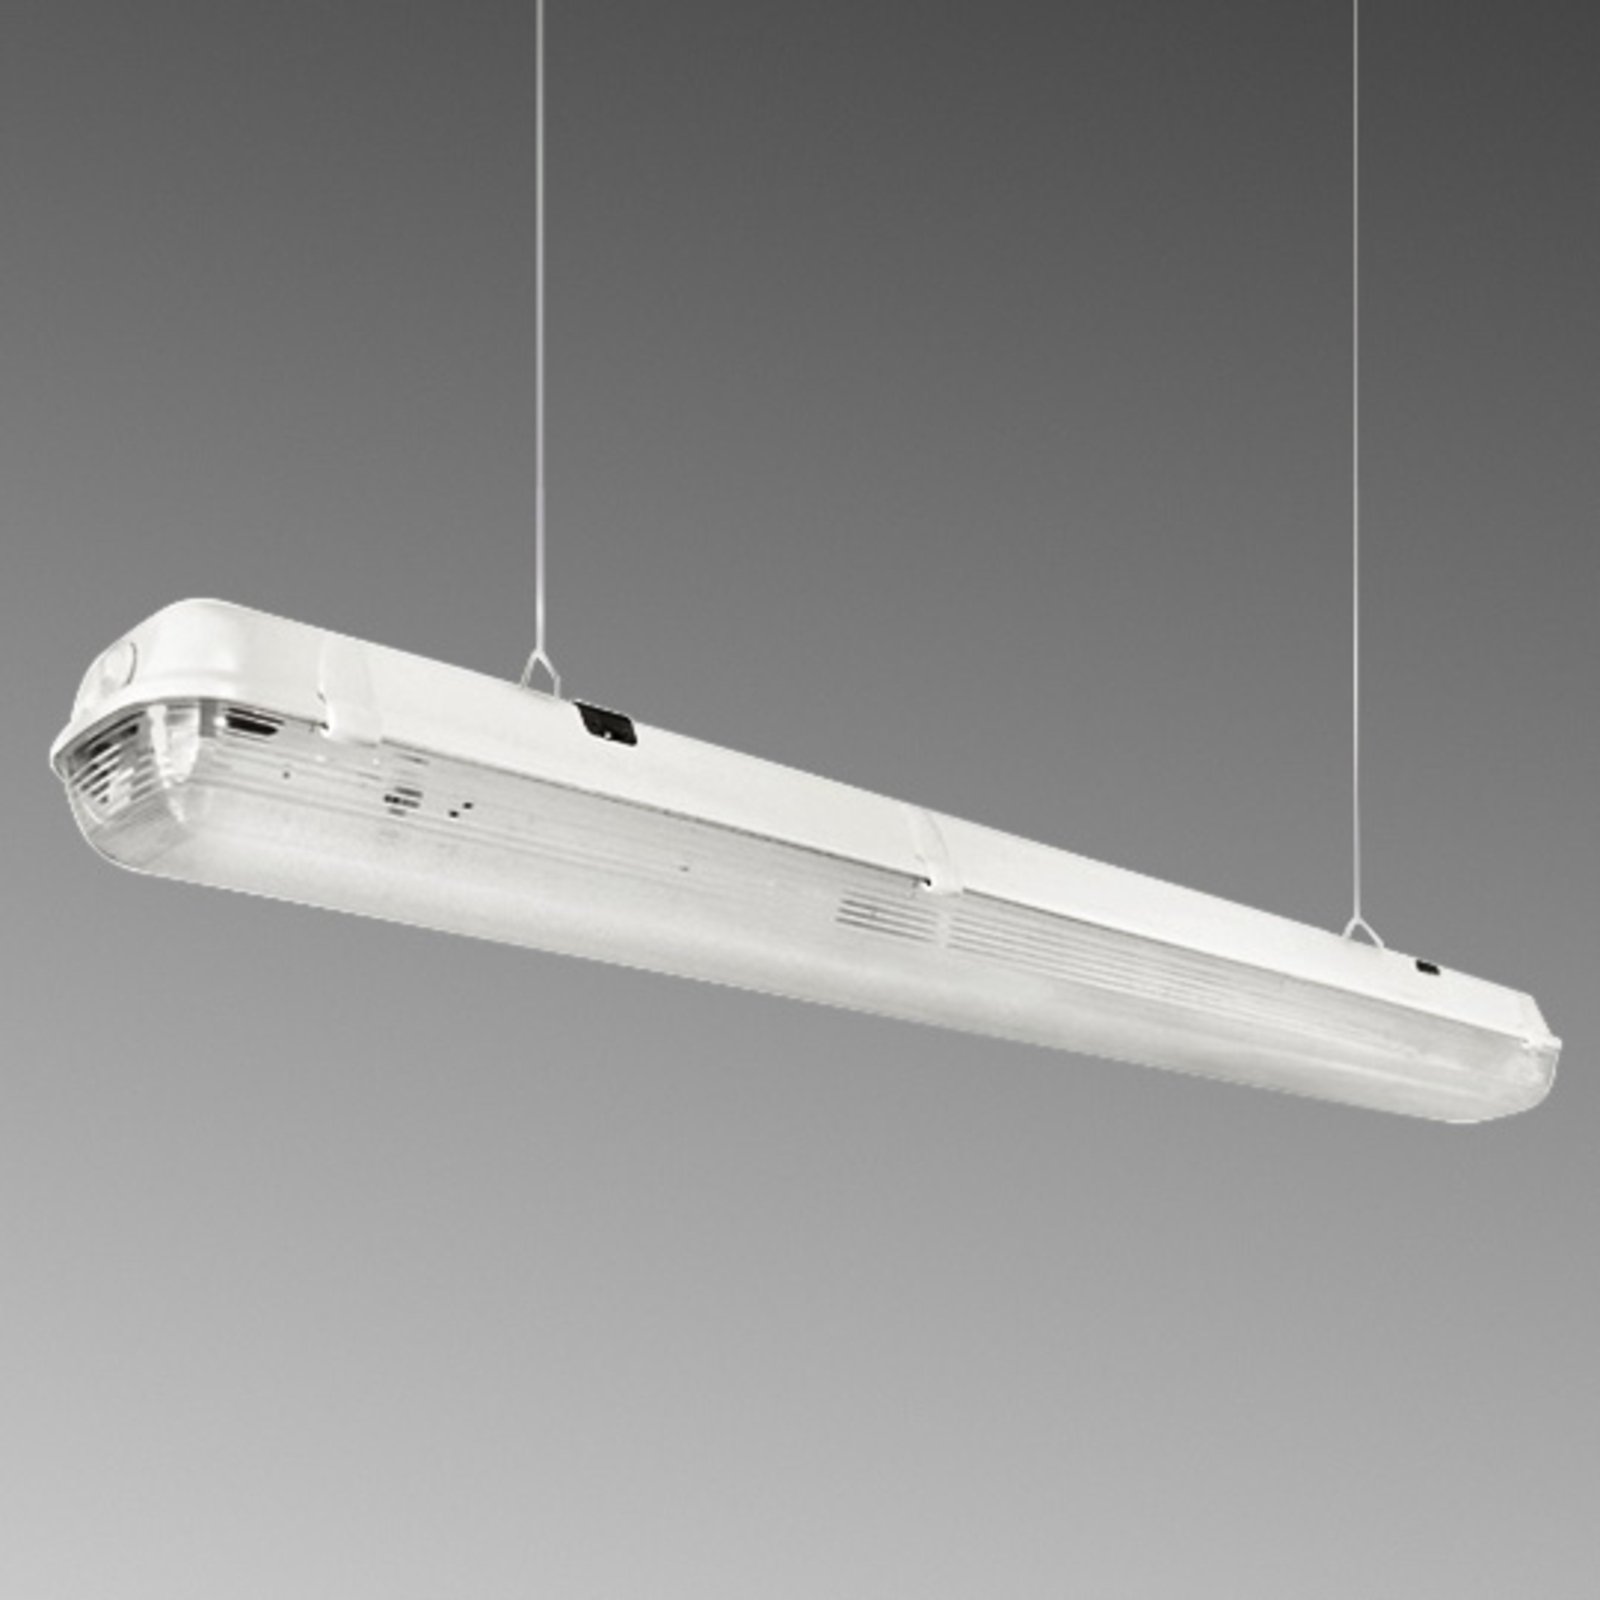 Industrial moisture-proof LED wraparound light 95W